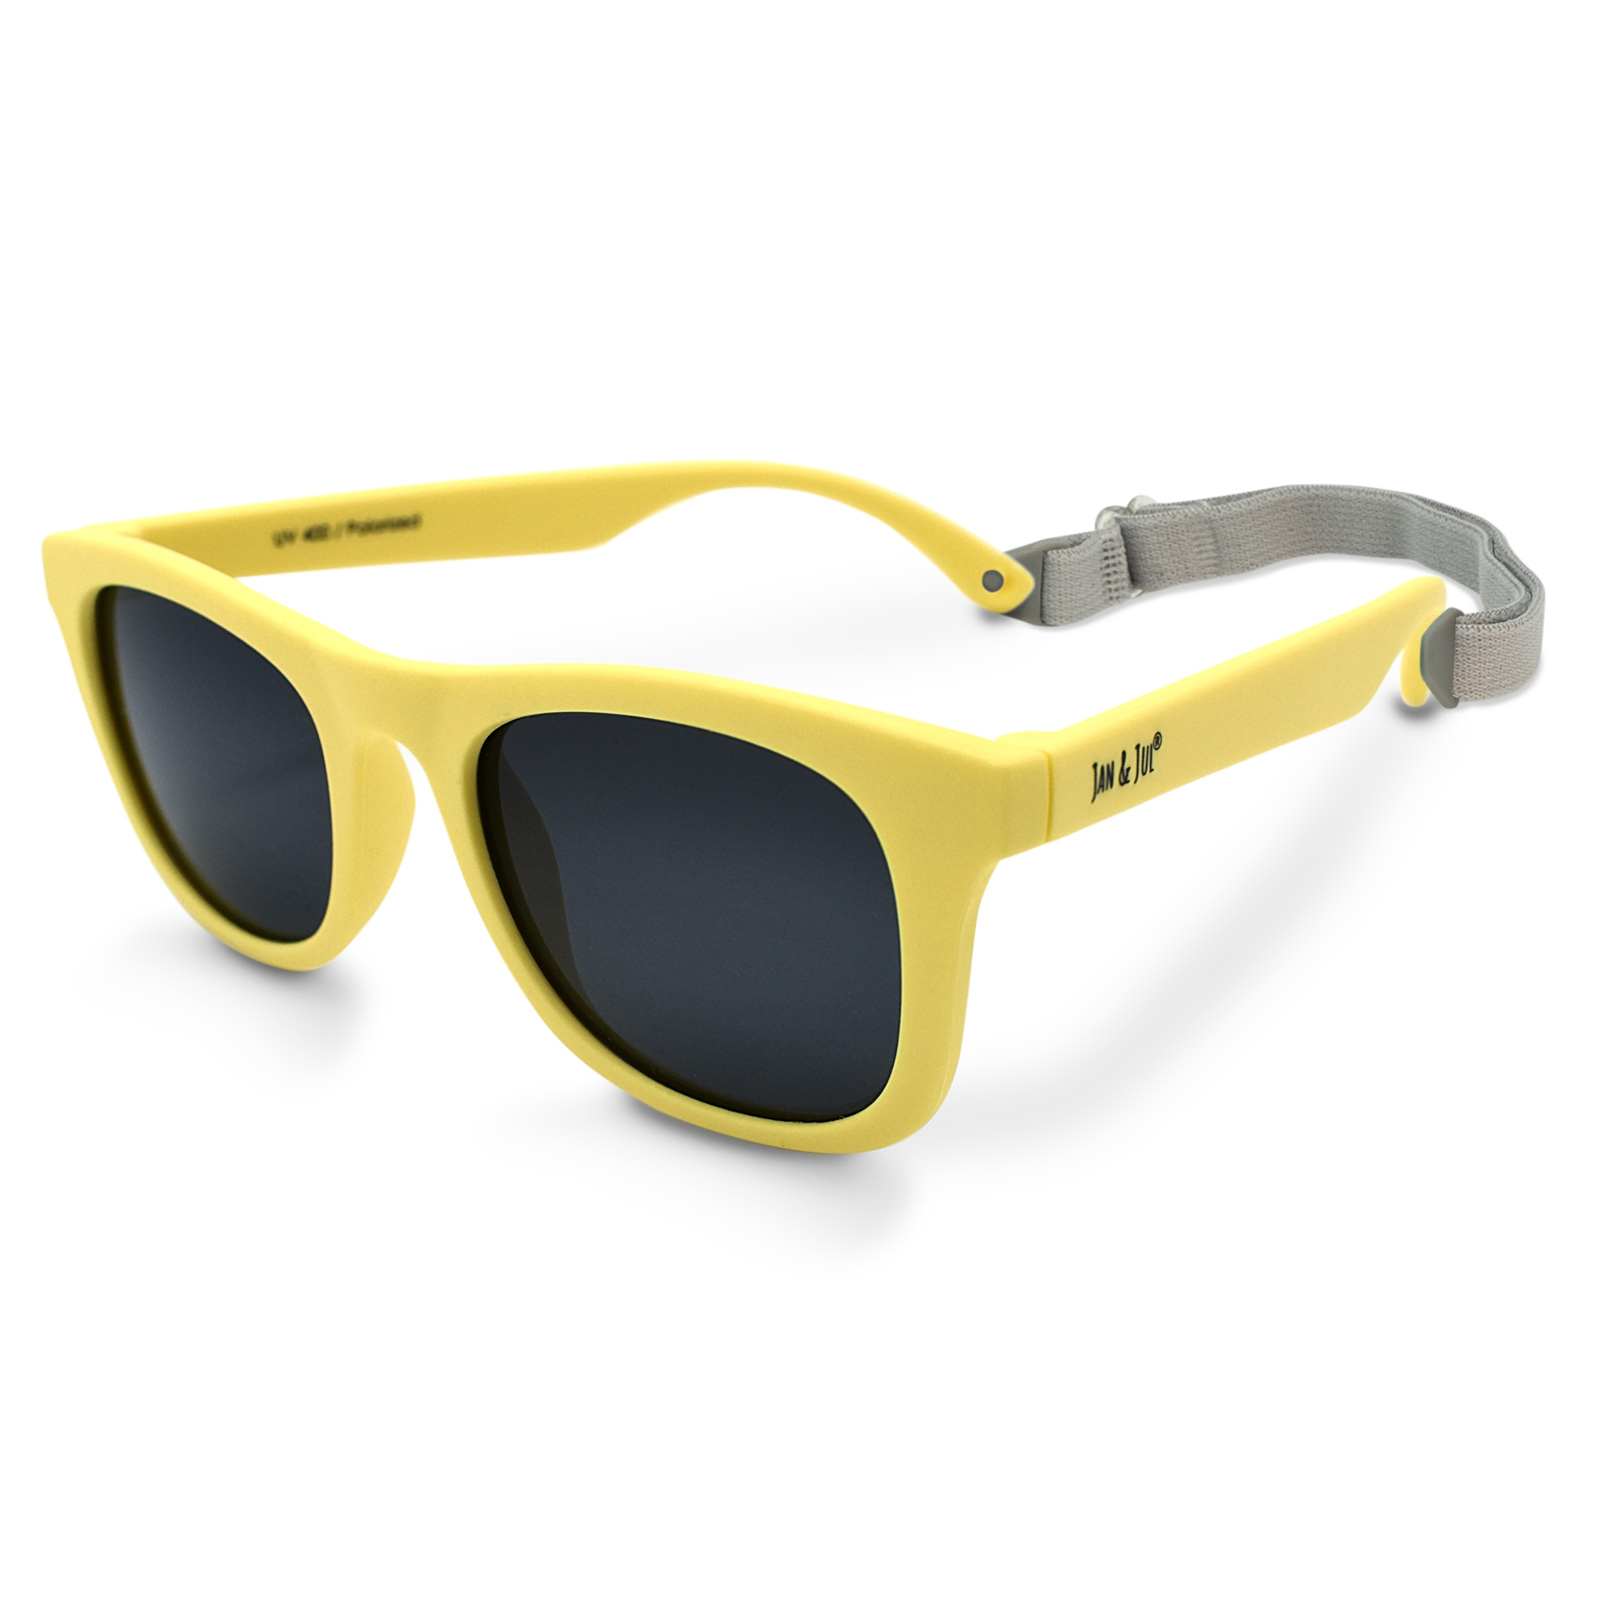 Jan & Jul Toddler Sunglasses with Strap, UV400 Polarized (M: 2 - 6 Years, Lemonade) - image 1 of 8